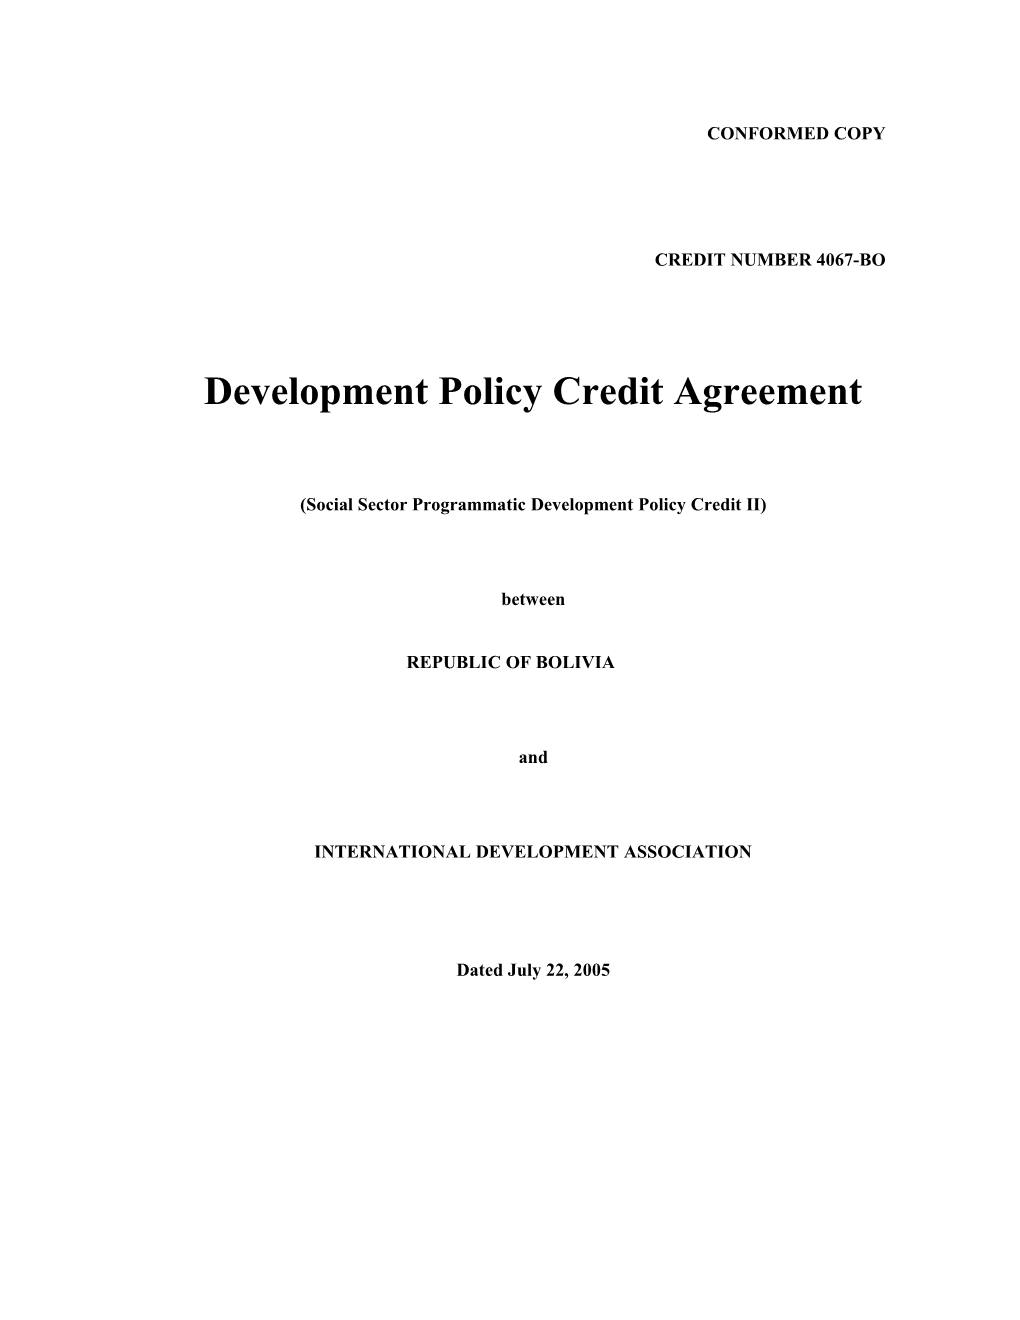 Development Policy Credit Agreement